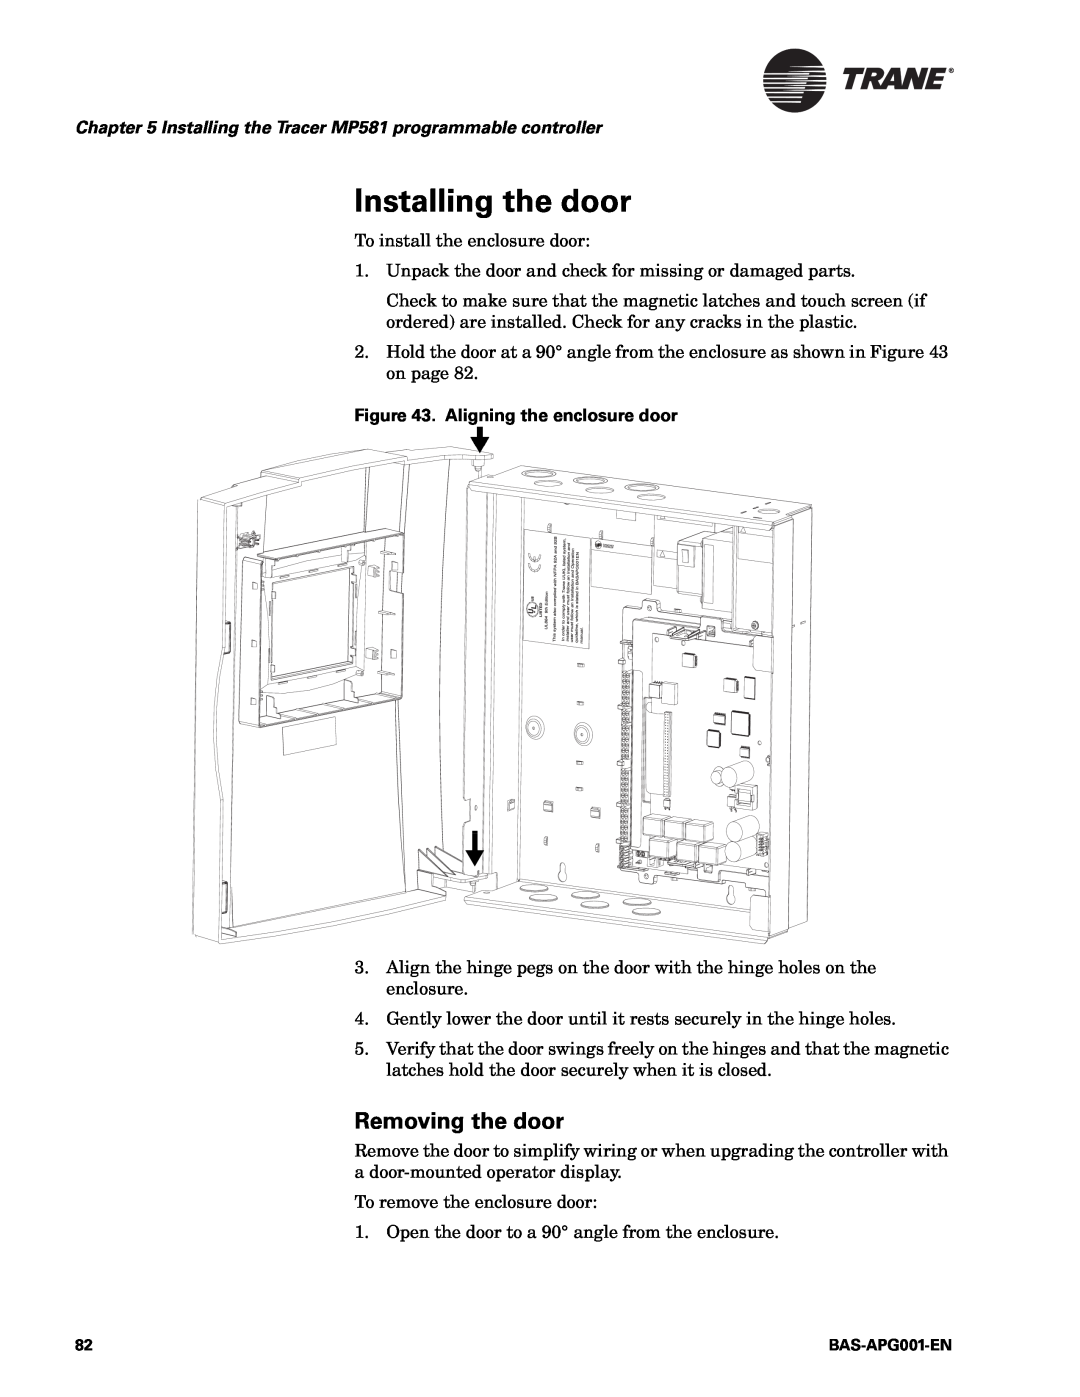 Trane BAS-APG001-EN manual Installing the door, Removing the door, Aligning the enclosure door 